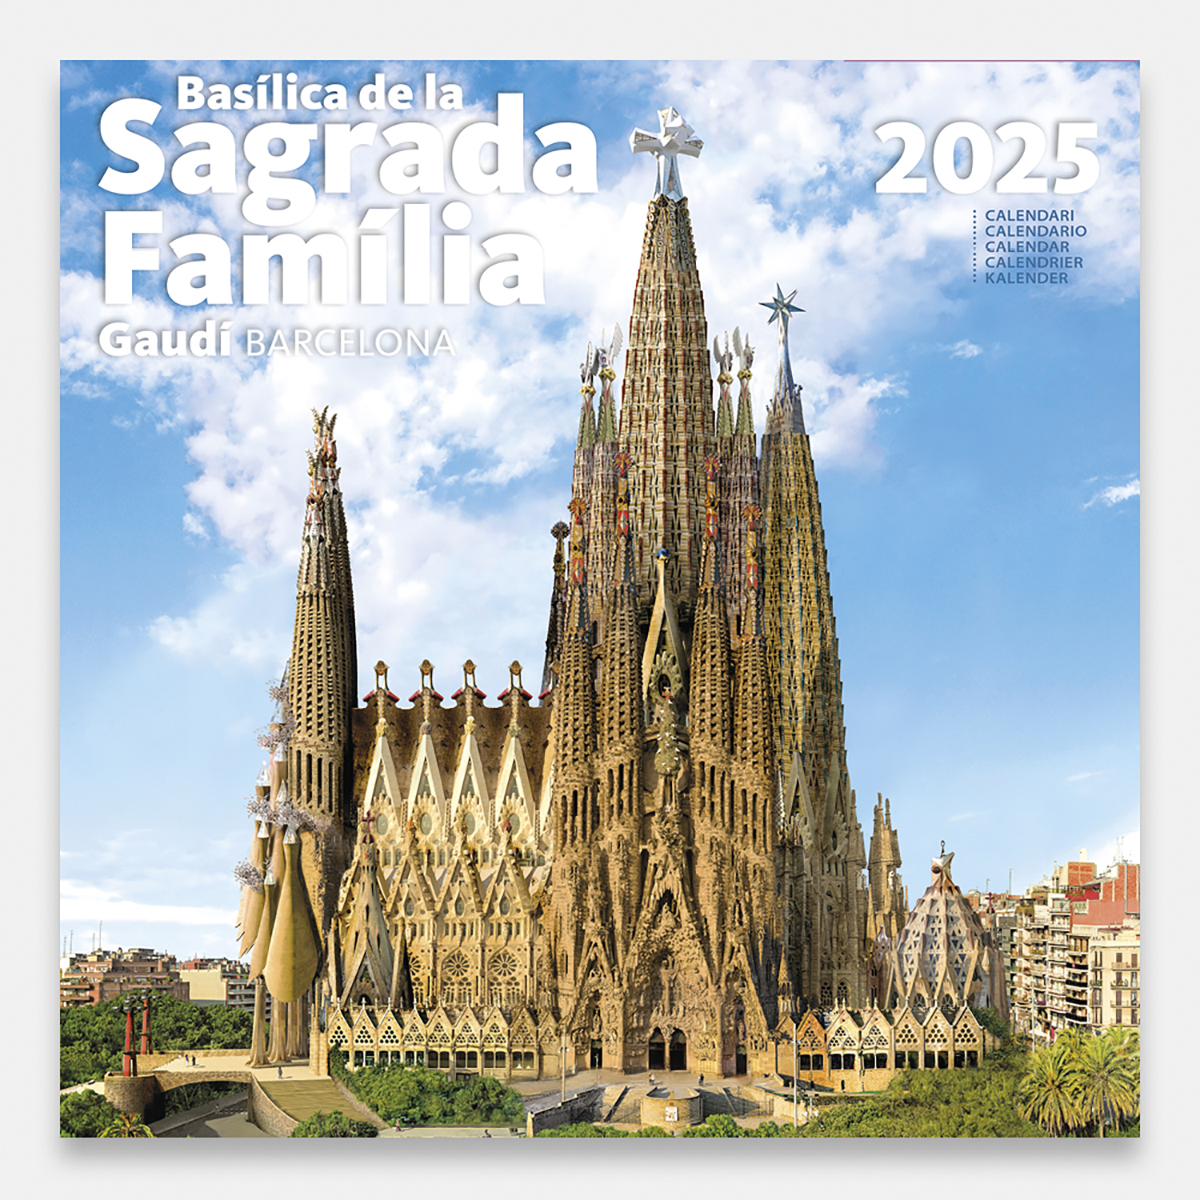 Calendar 2025 Basílica de la Sagrada Família 25sfg1 calendario pared 2025 gaudi sagrada familia